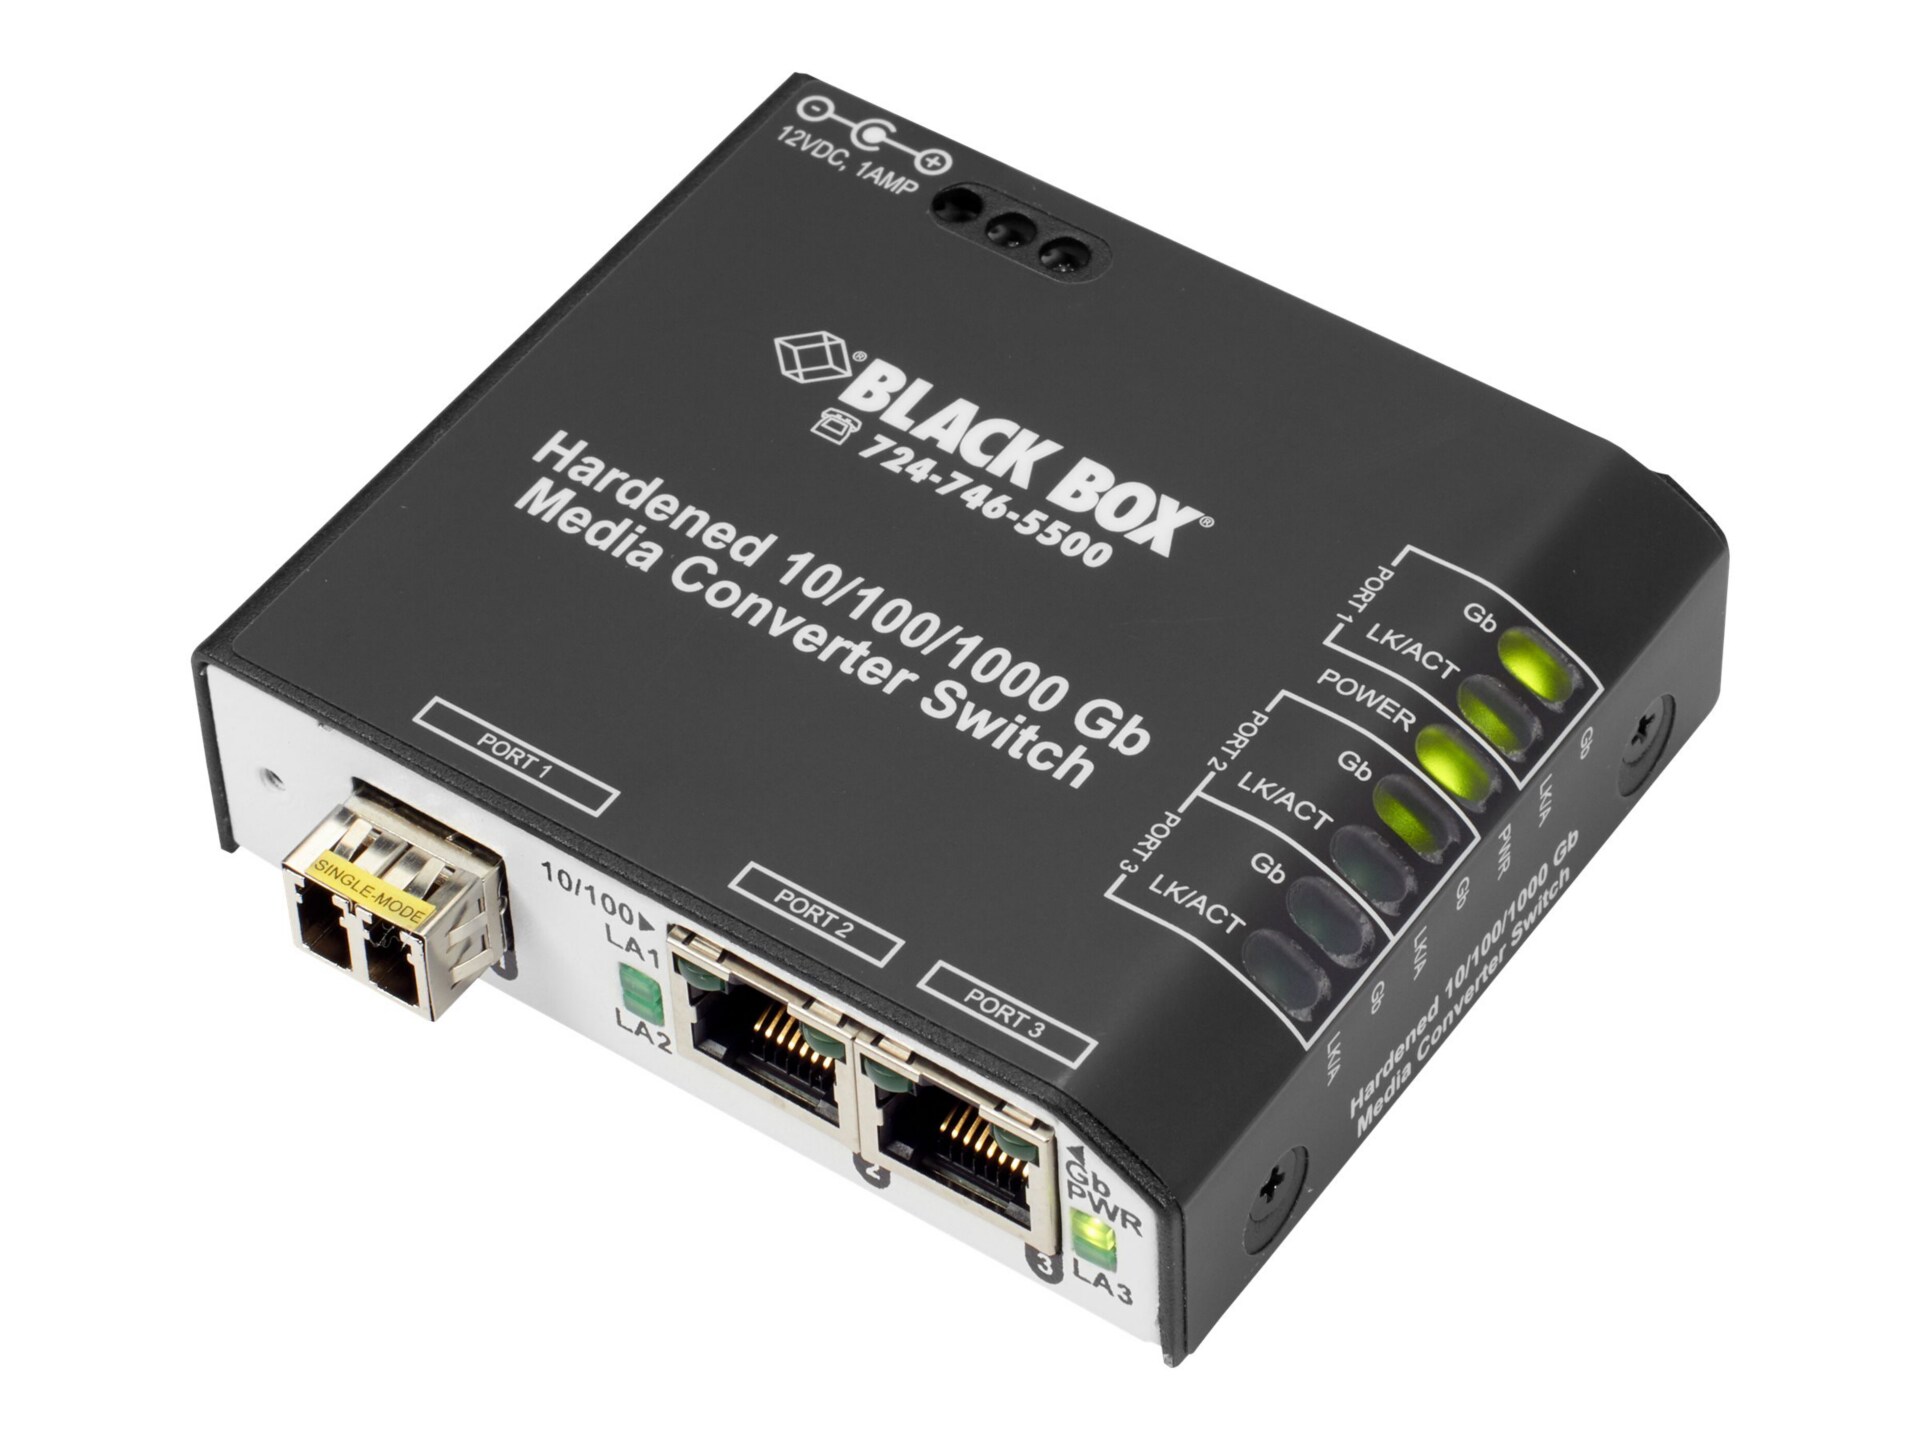 Black Box Hardened Media Converter Switch 110-VAC - fiber media converter - 10Mb LAN, 100Mb LAN, GigE